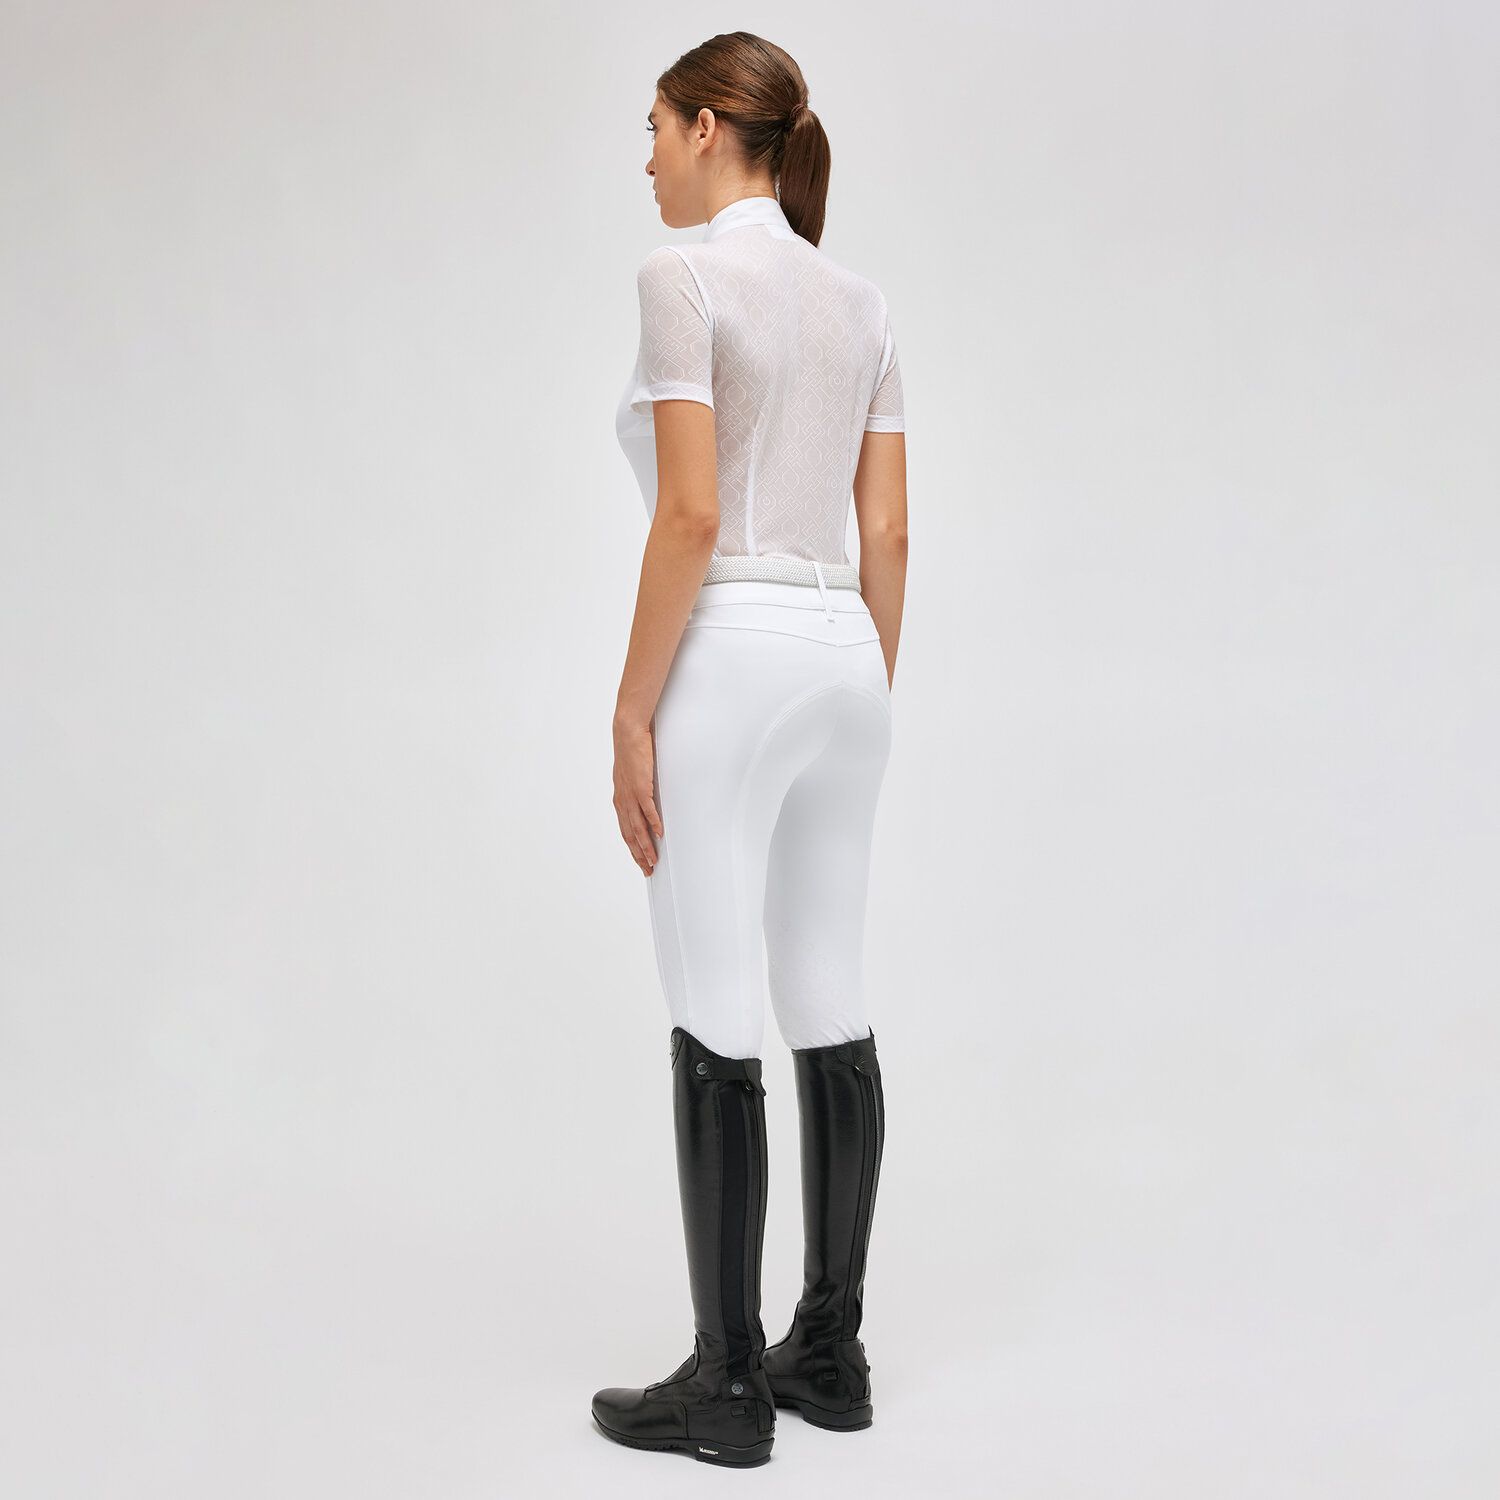 Cavalleria Toscana Women’s jersey show shirt WHITE/KNIT-2